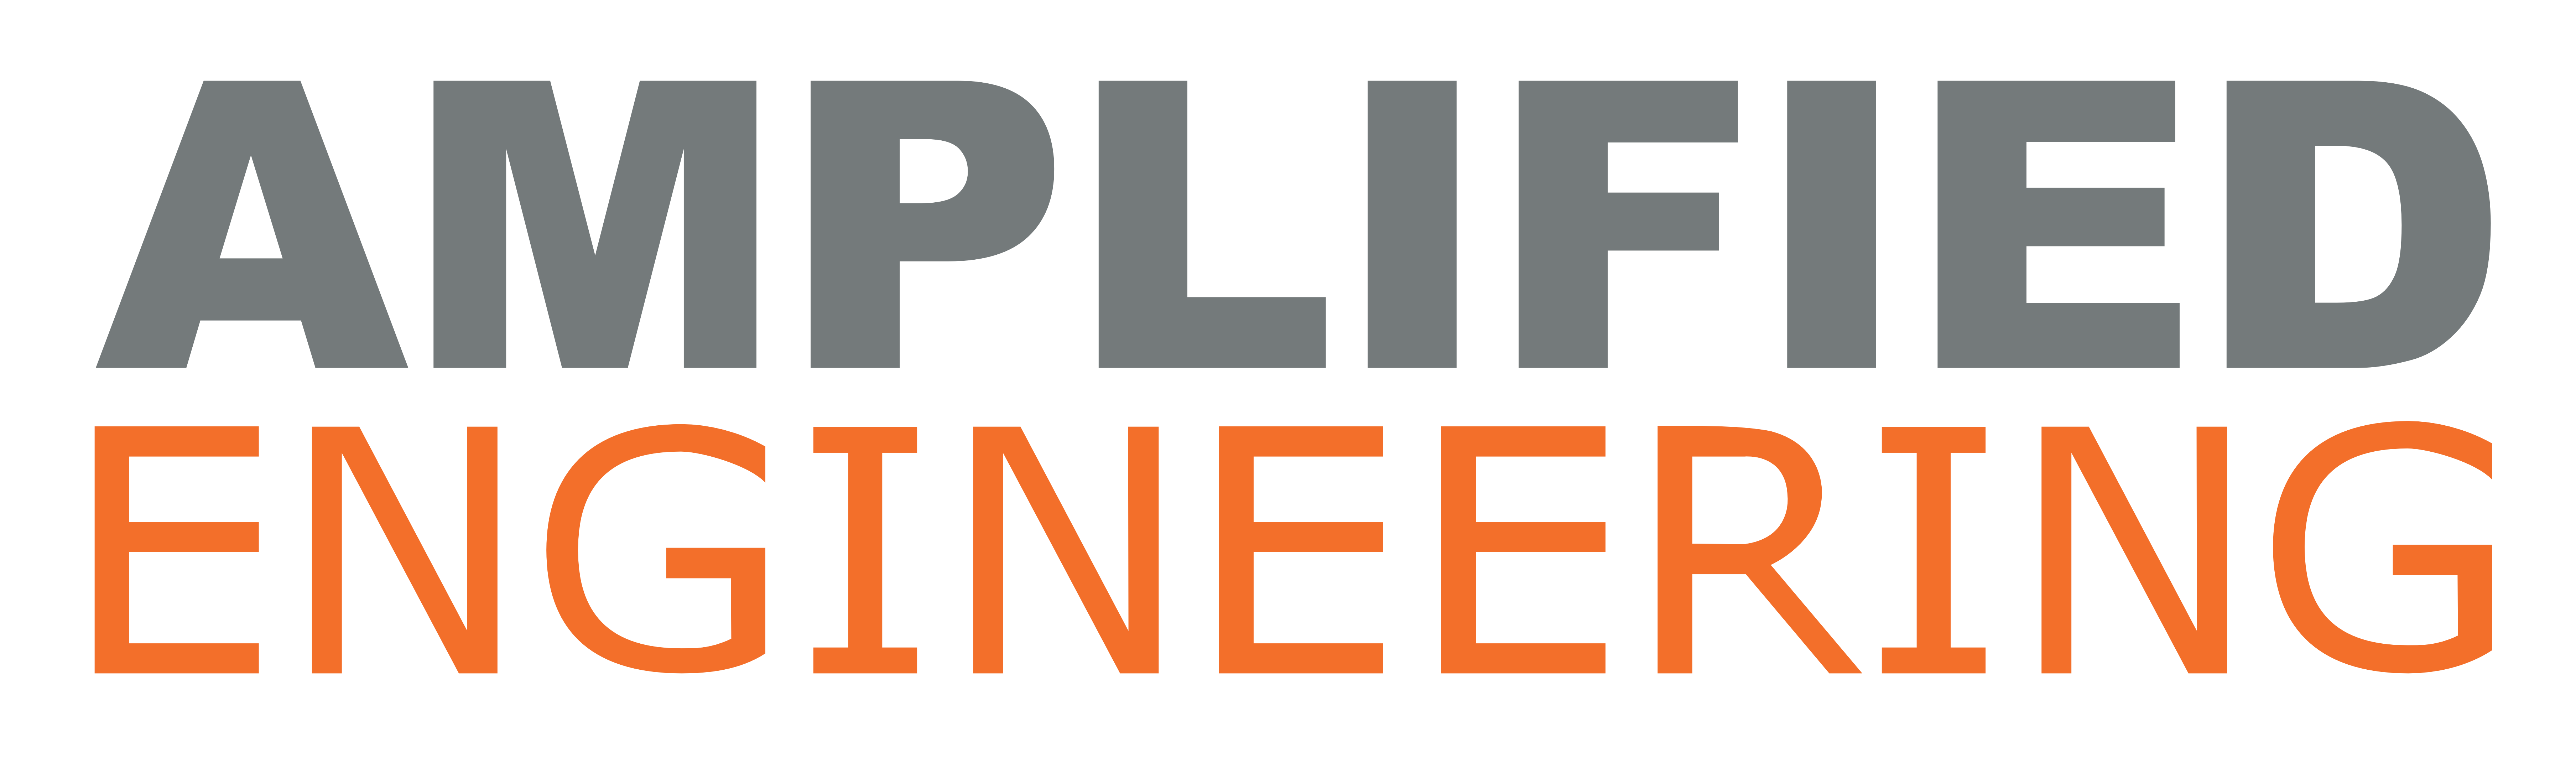 Amplified Engineering logo